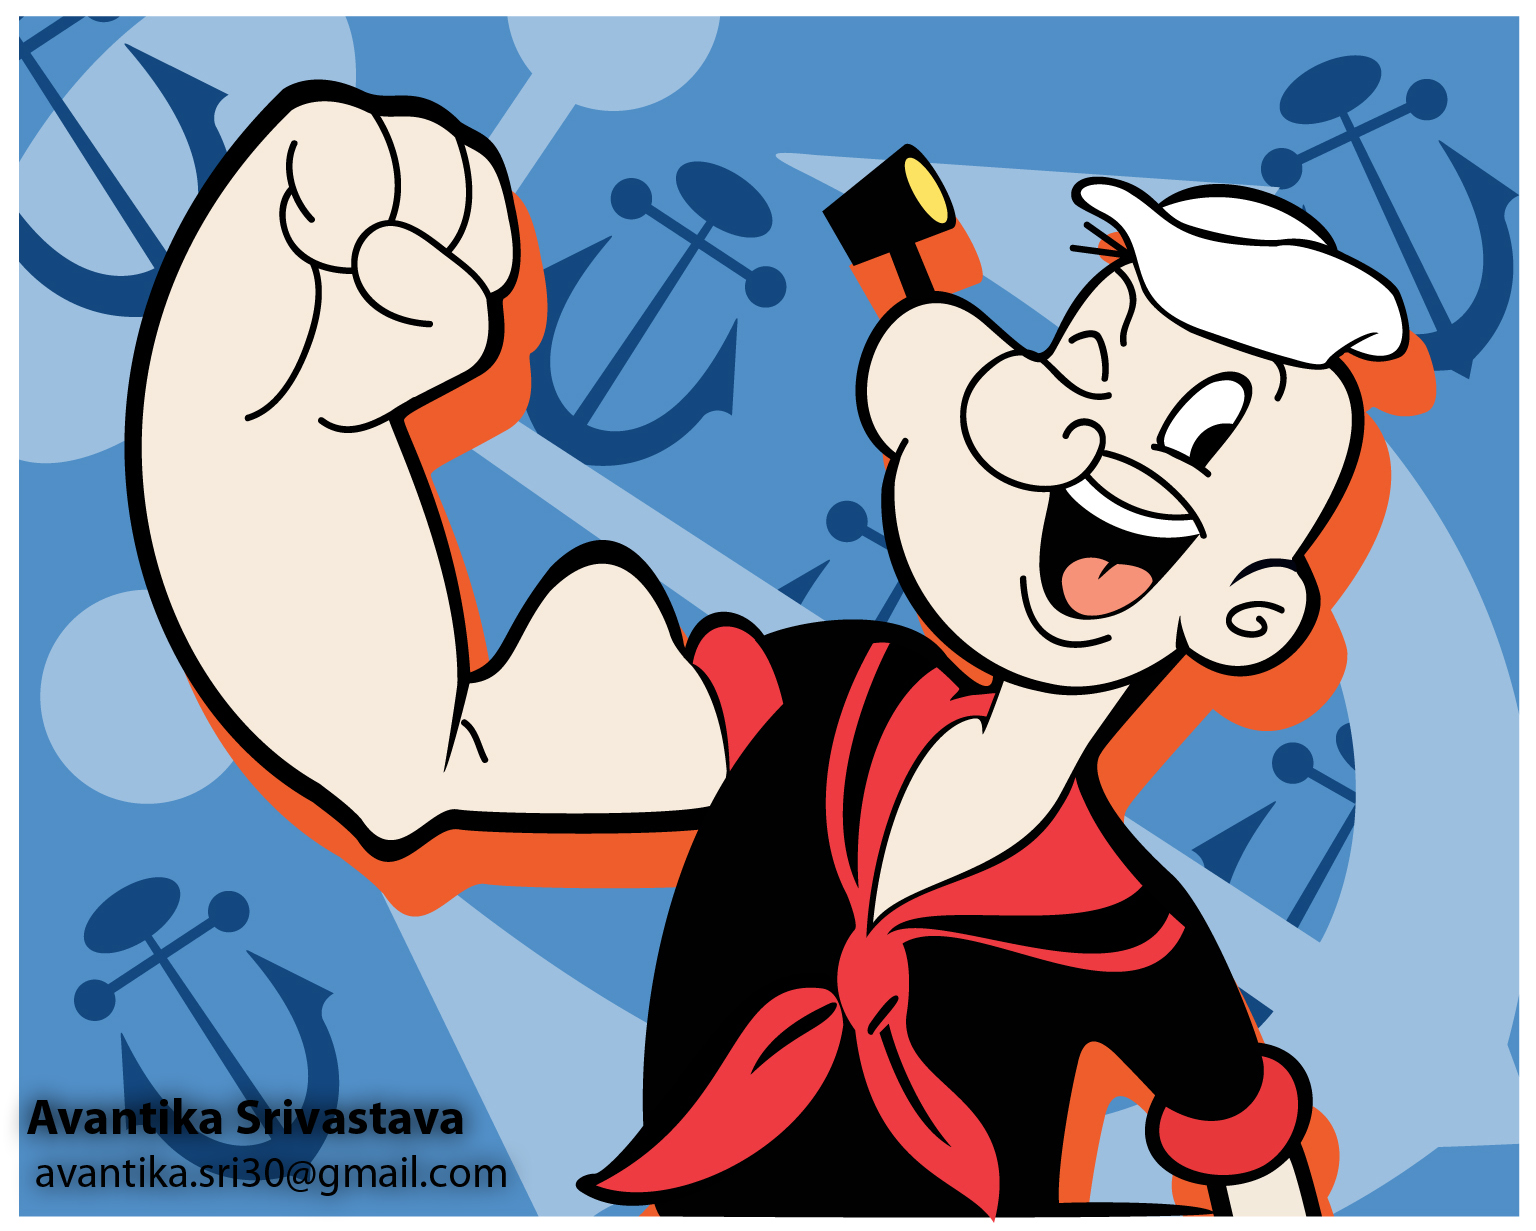 Popeye - The Sailor Man.